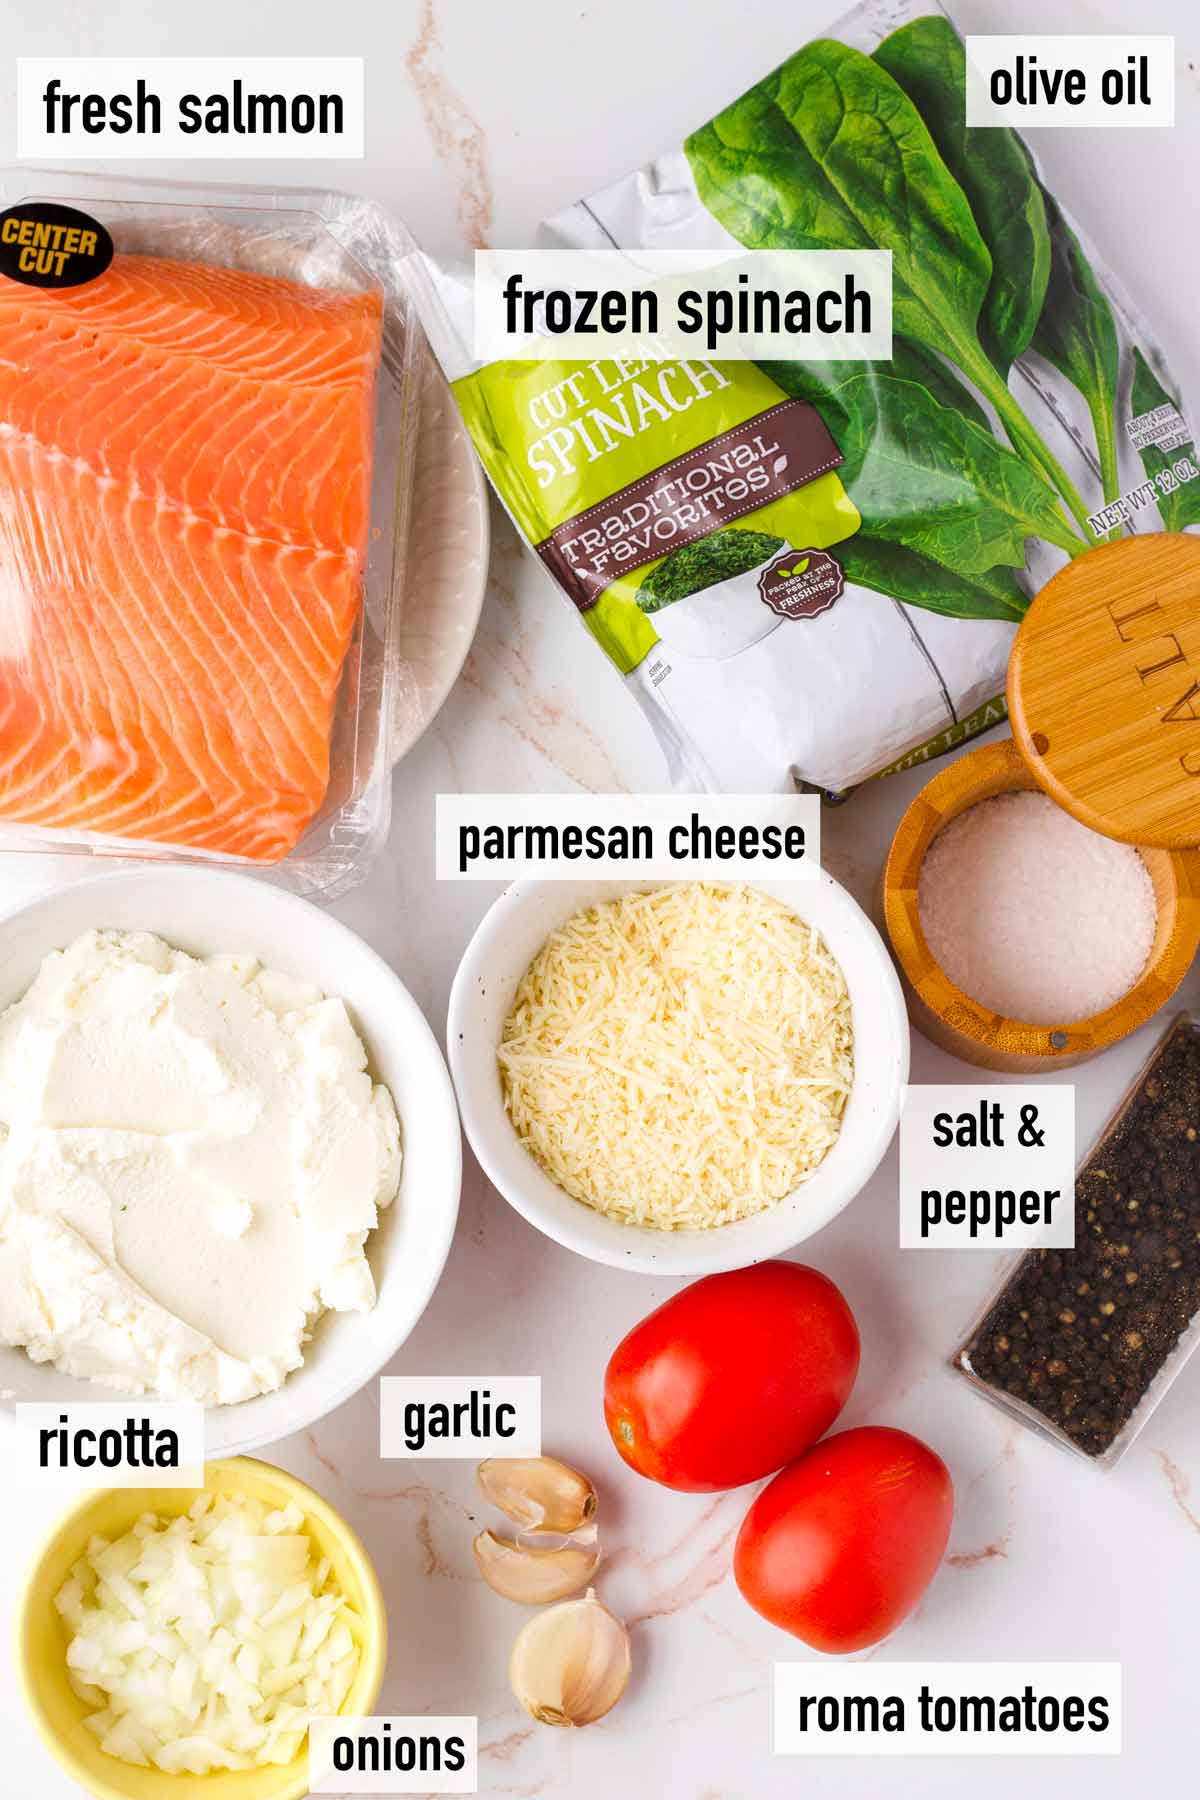 labeled ingredients to make salmon florentine